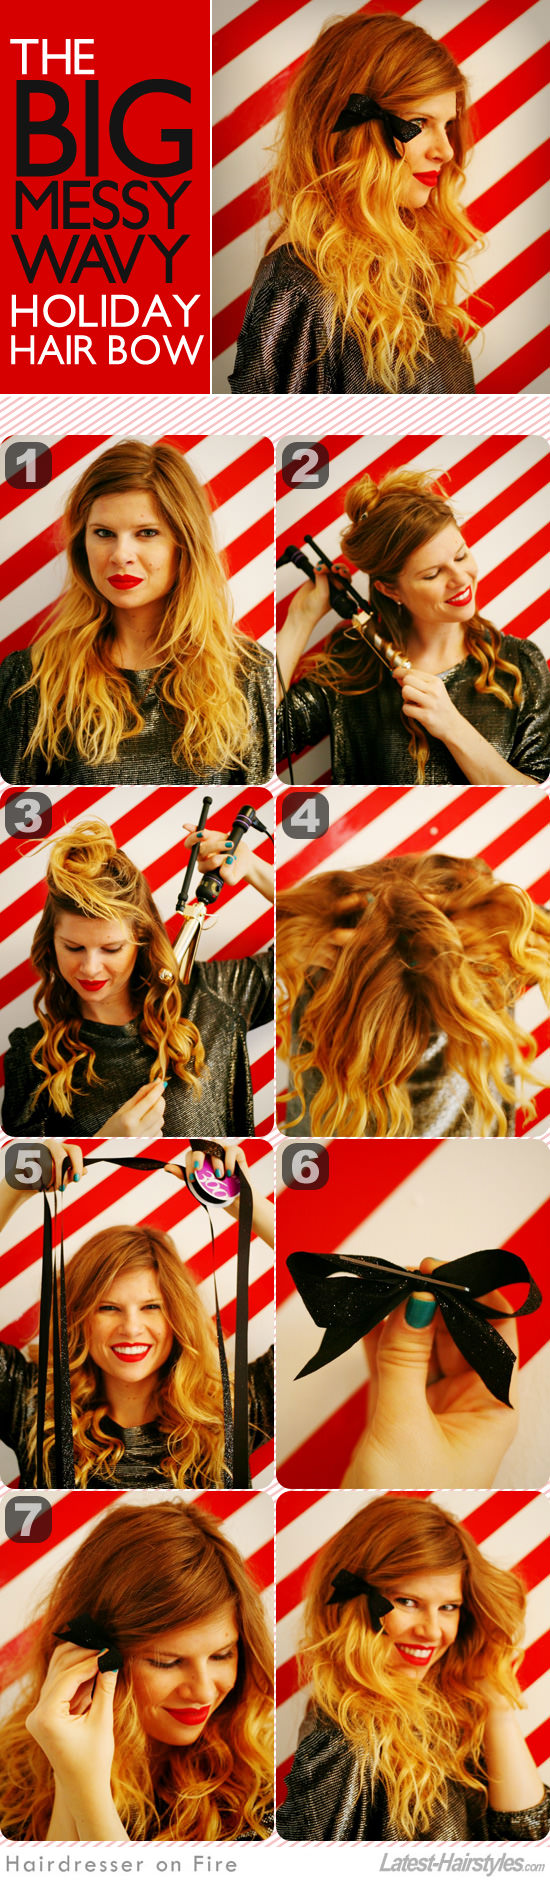 holiday hair bow tutorial